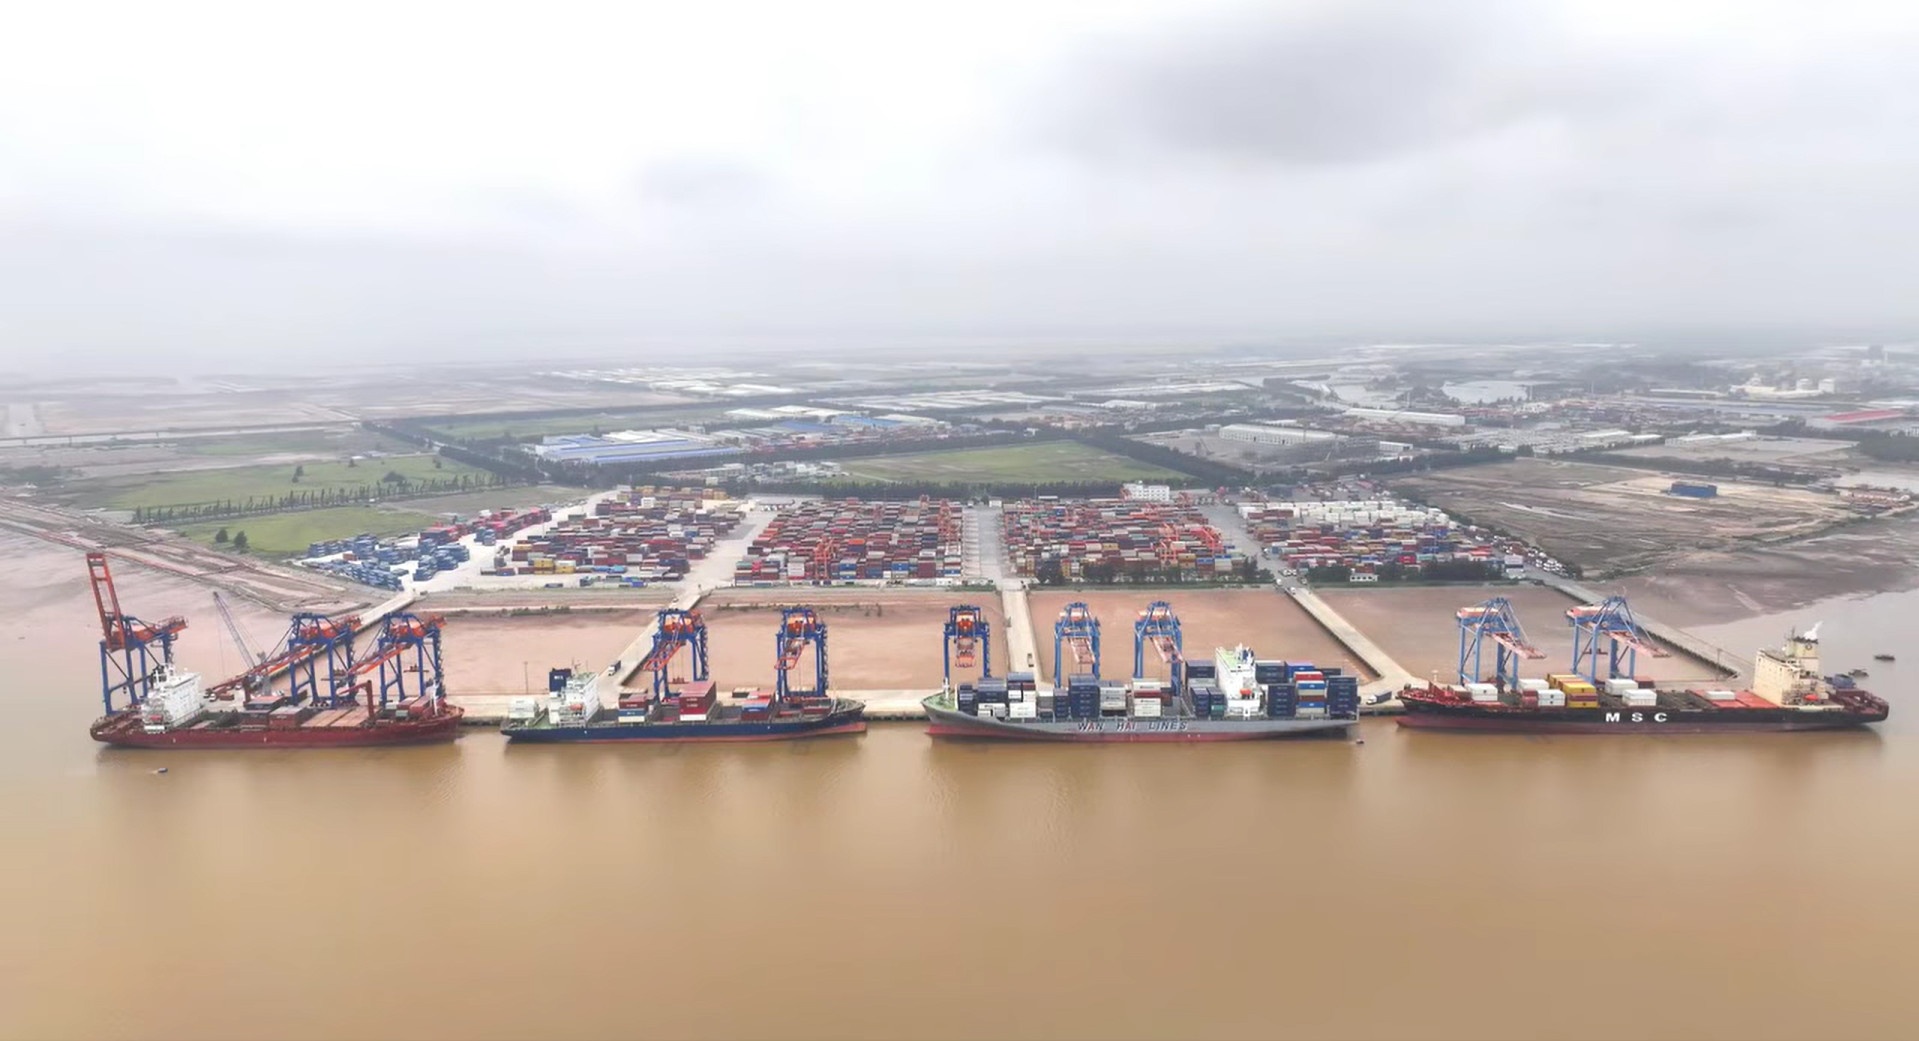 Coastal IZs provide ideal base for logistics firms